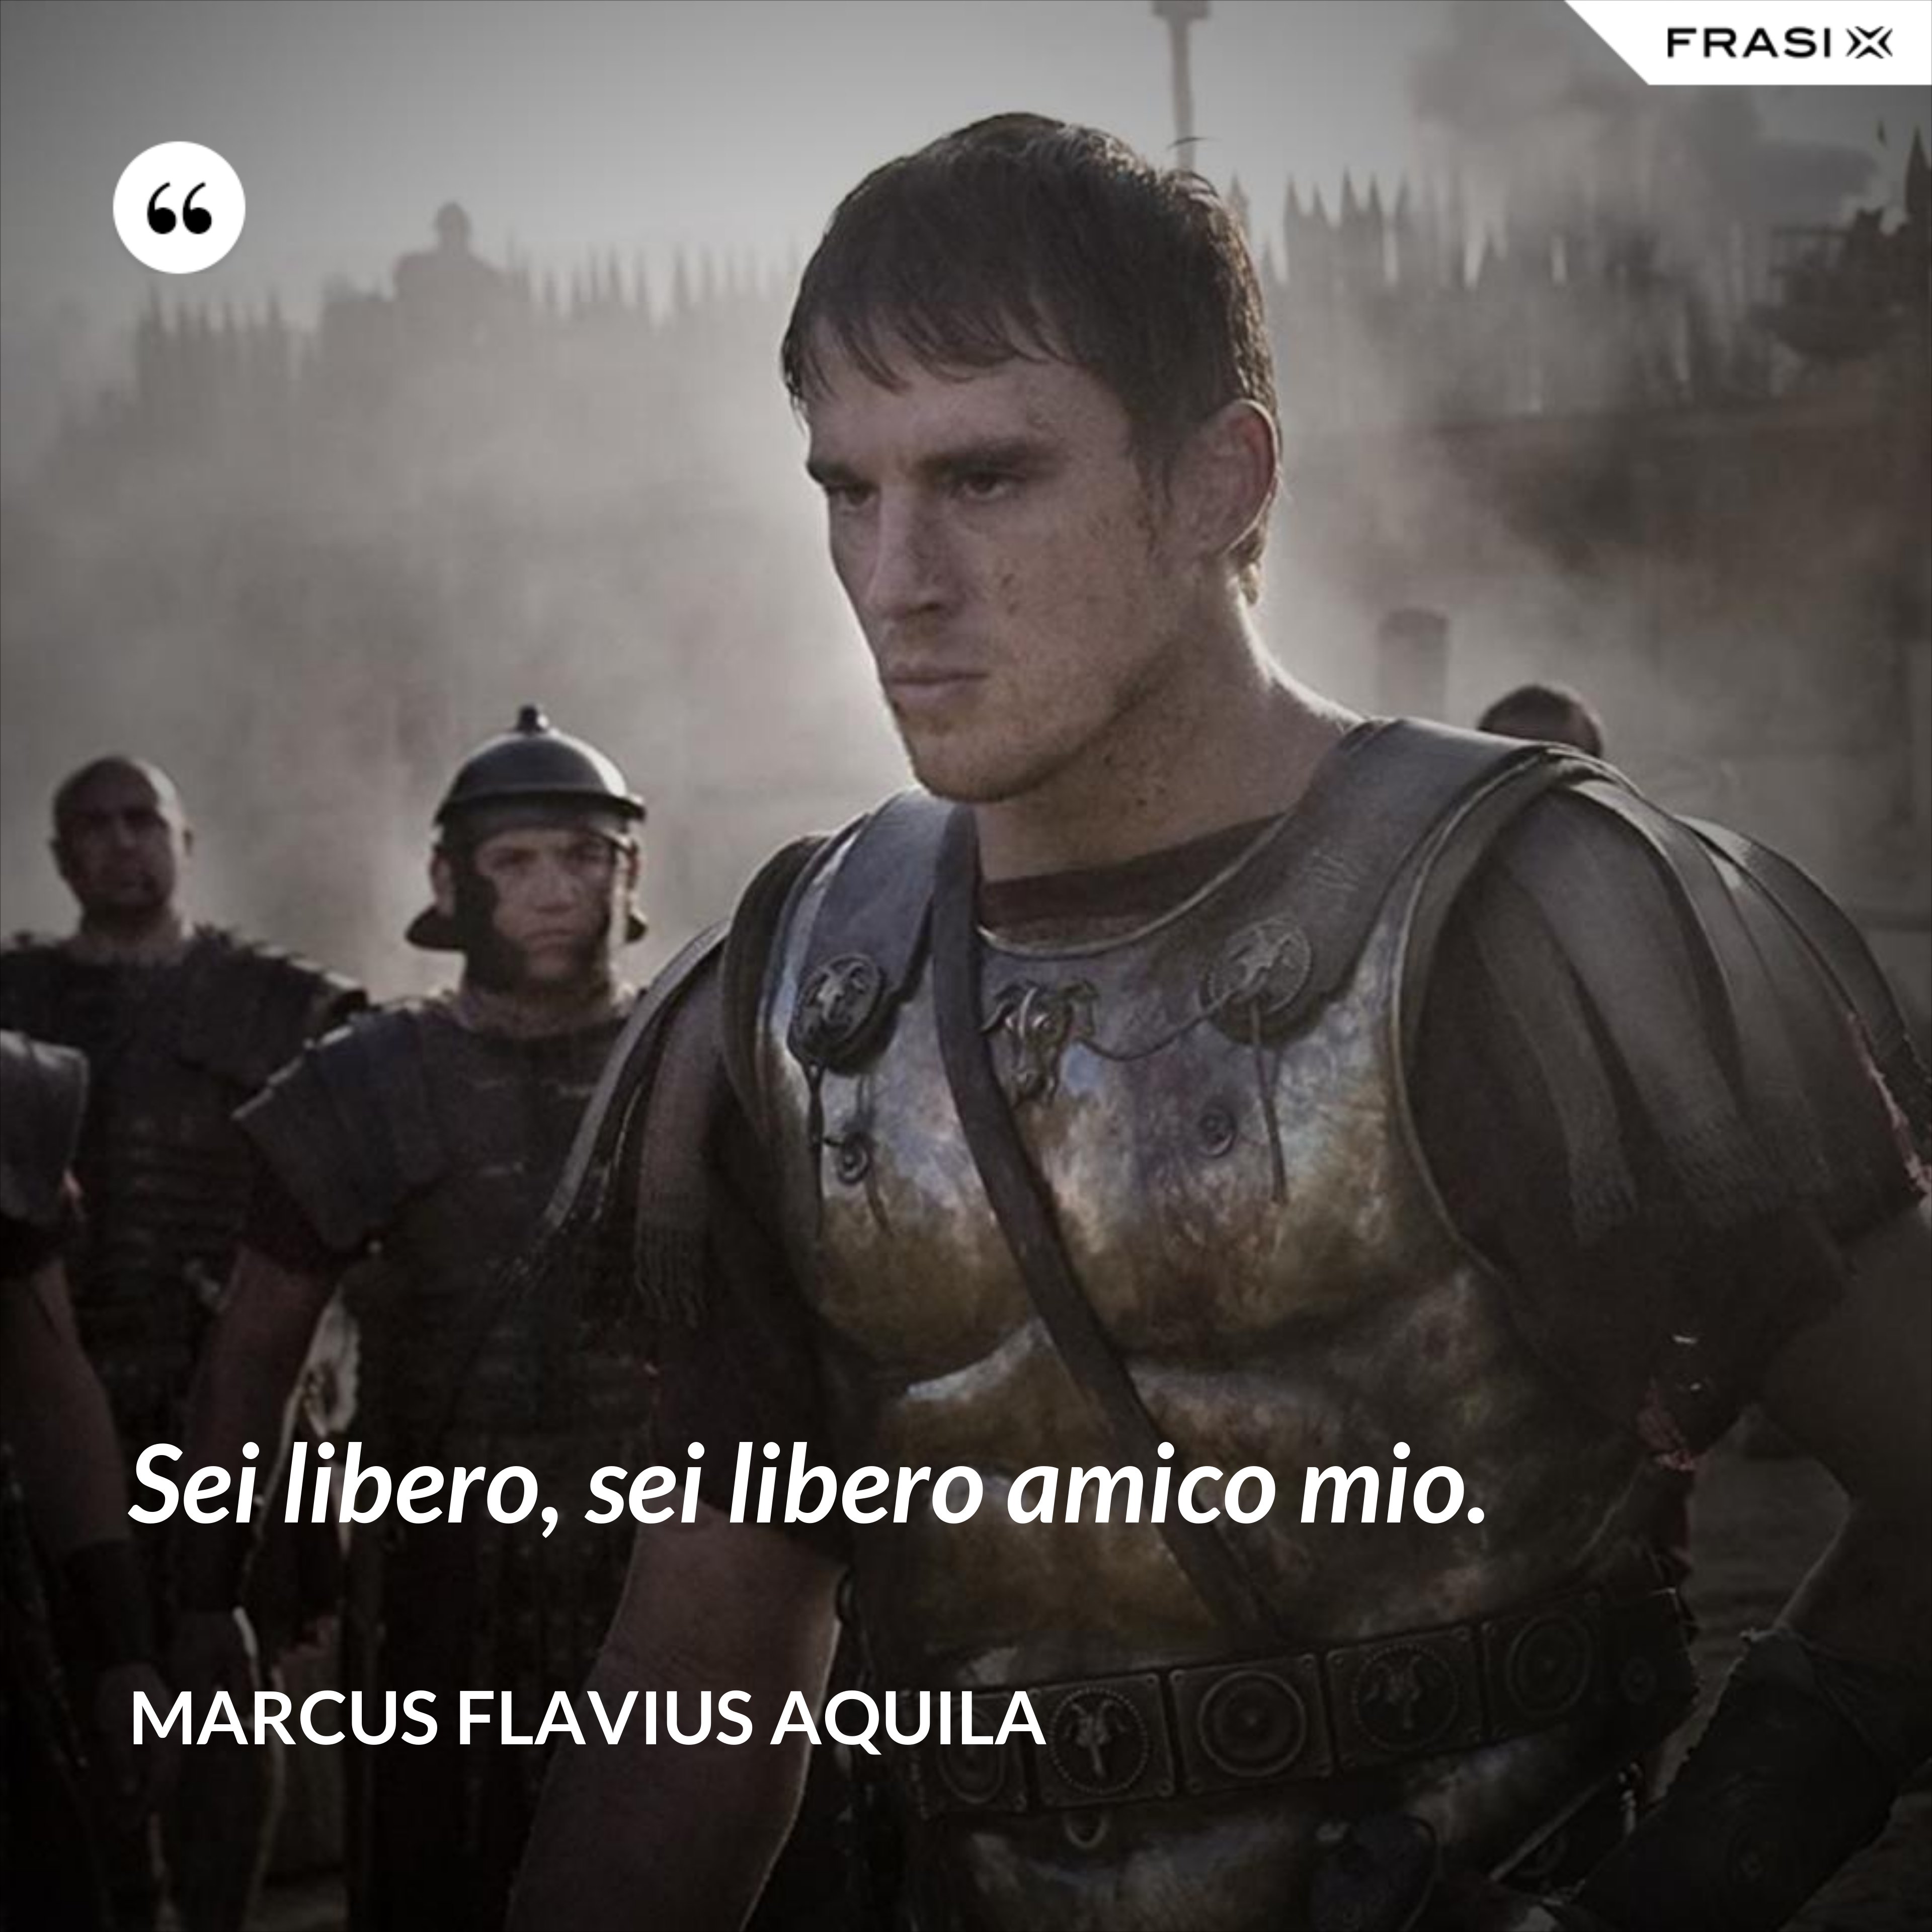 Sei libero, sei libero amico mio. - Marcus Flavius Aquila